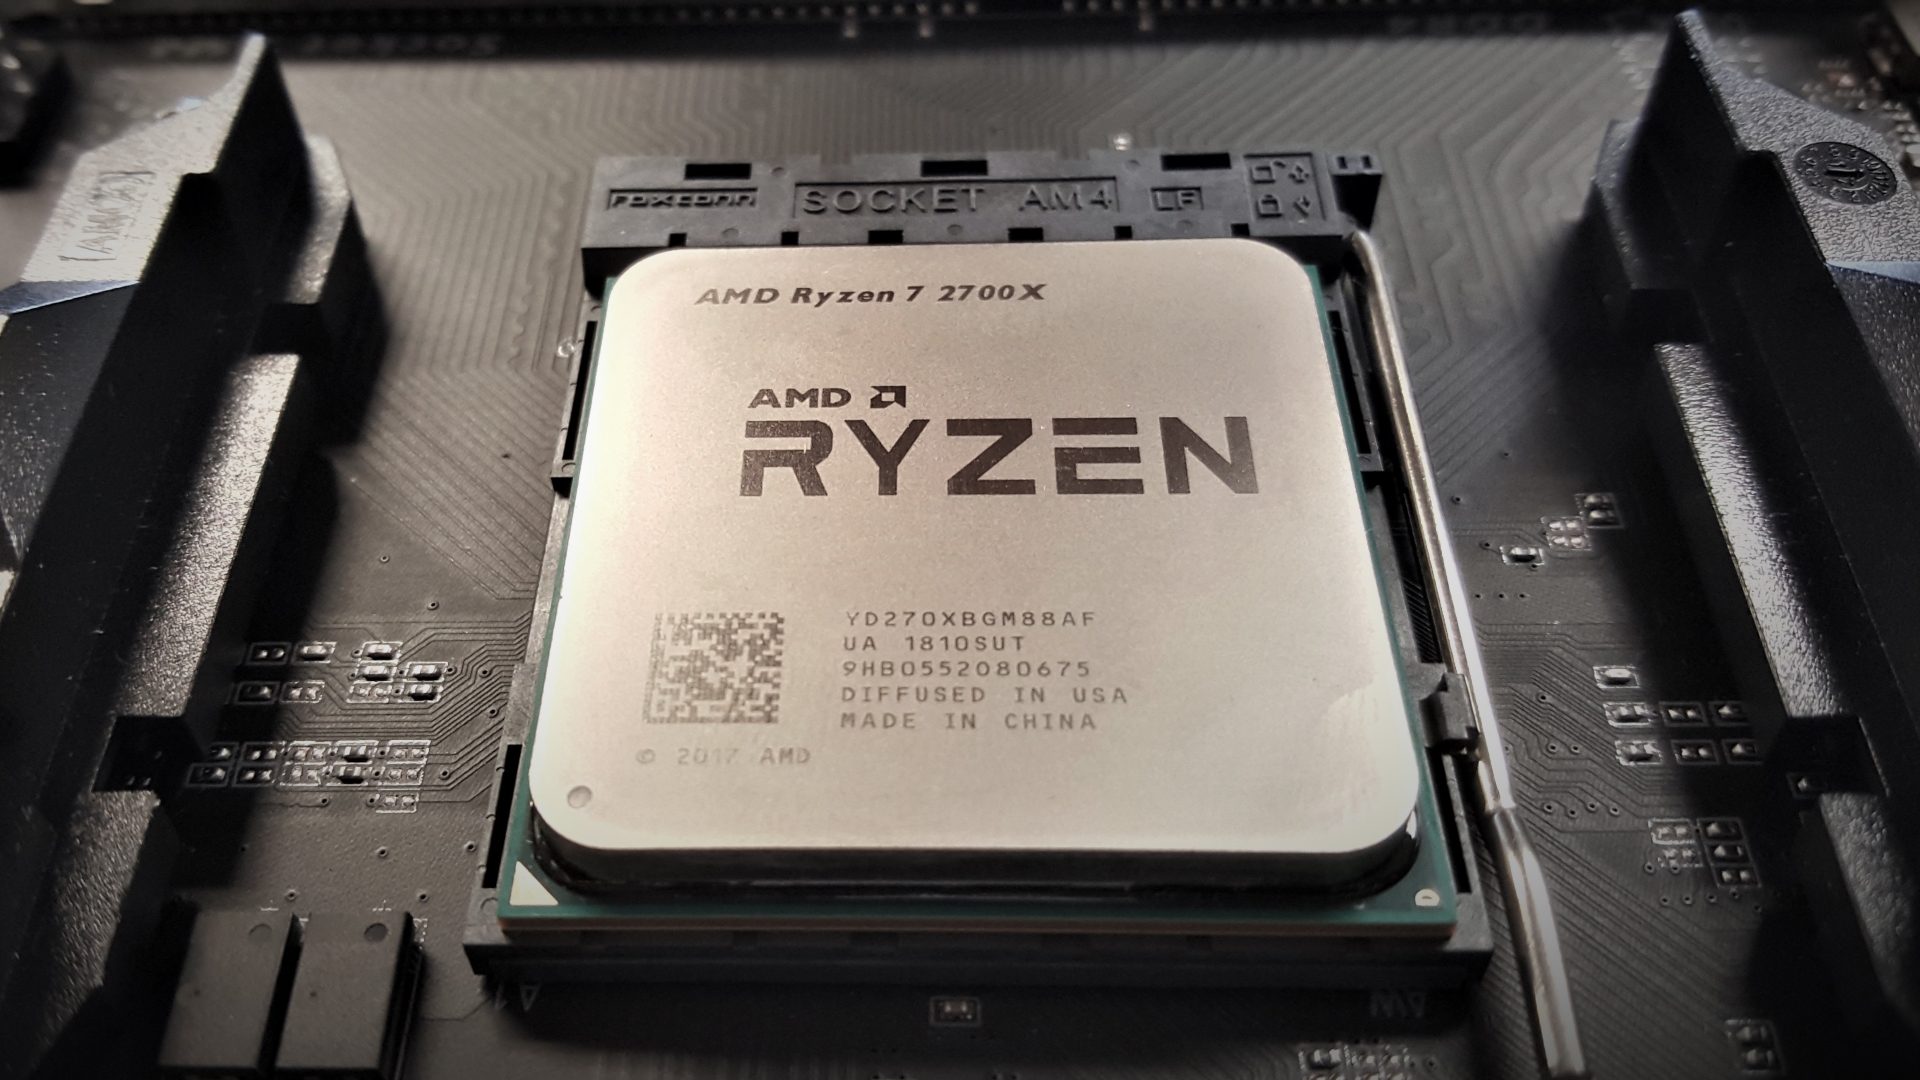 AMD Ryzen 7 2700X review: the Intel Coffee Lake CPU killer